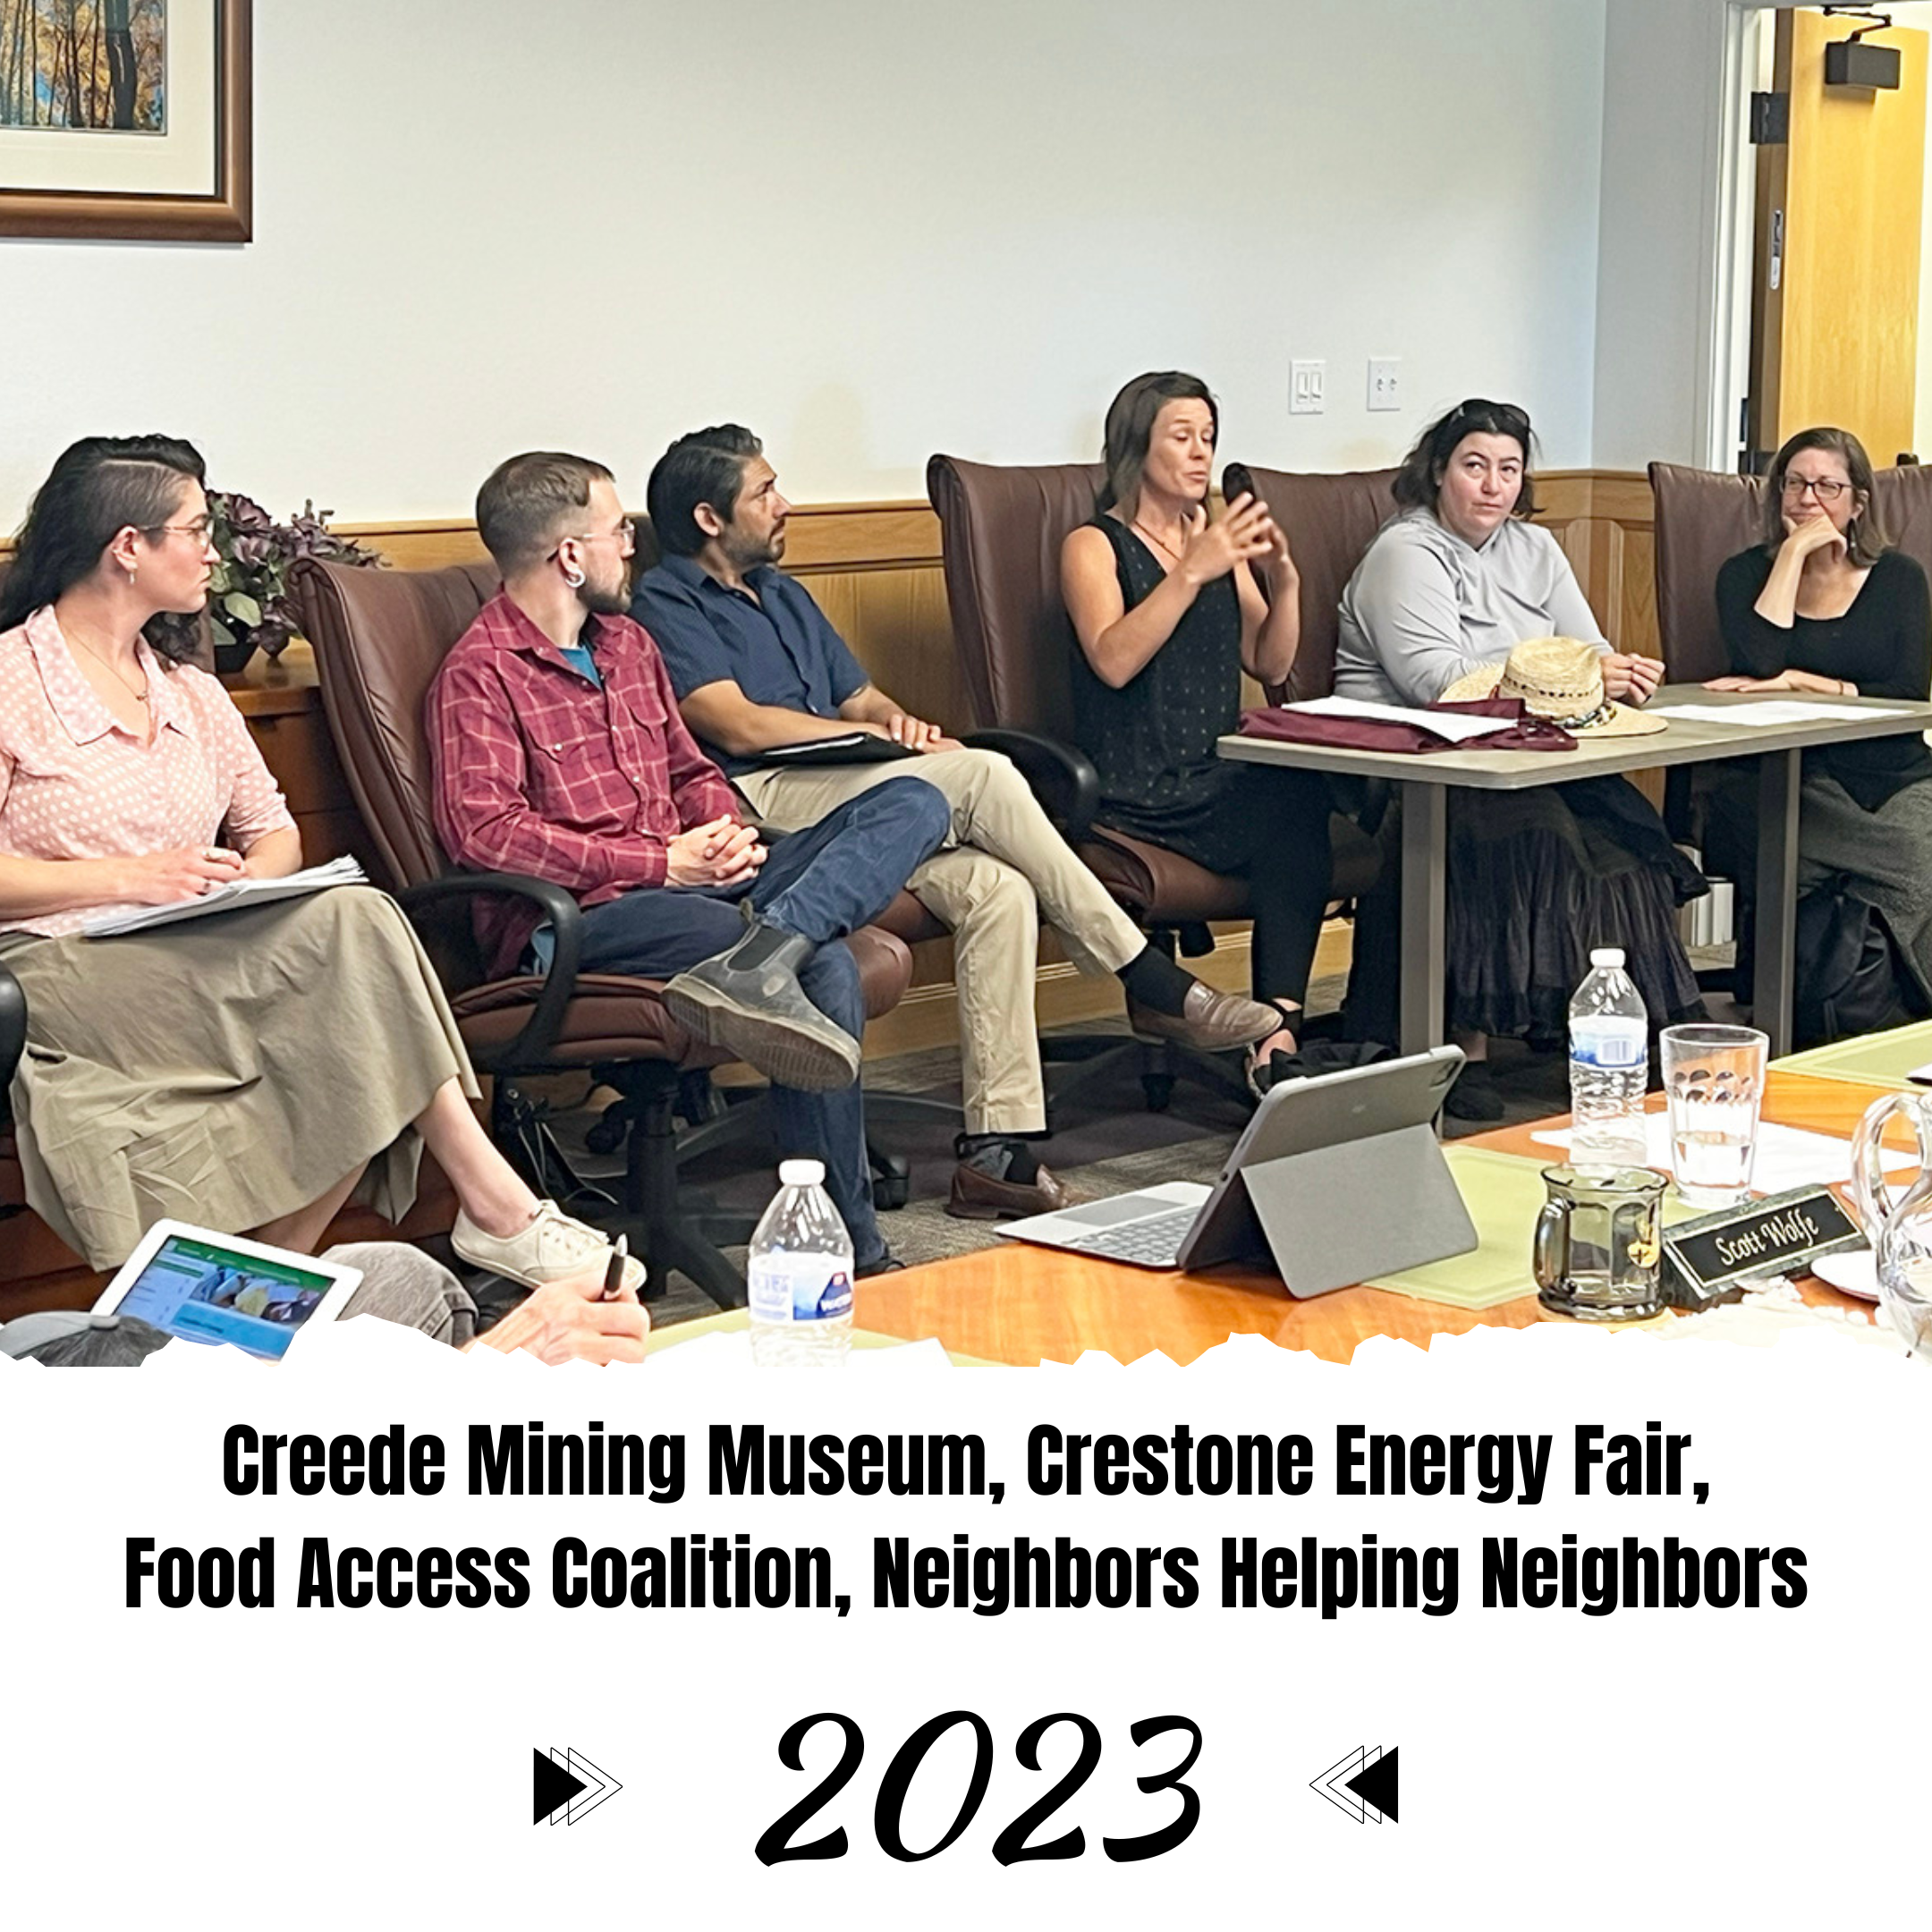 representatives from Creede Mining Museum, Crestone Energy Fair,  Food Access Coalition, Neighbors Helping Neighbors